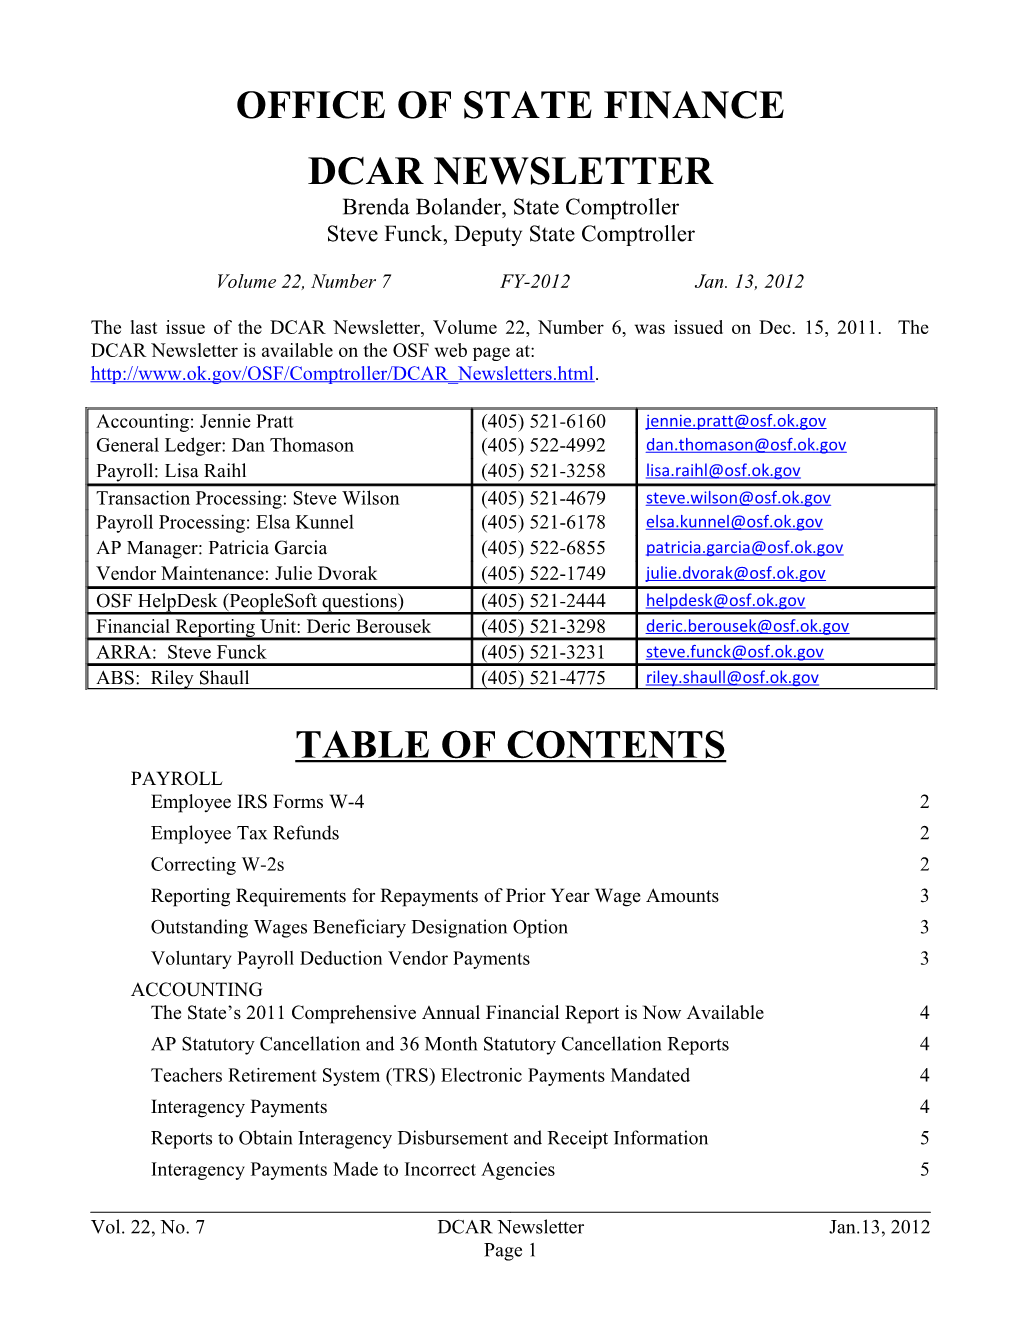 Office of State Finance DCAR Newsletter, Dec. 15, 2011